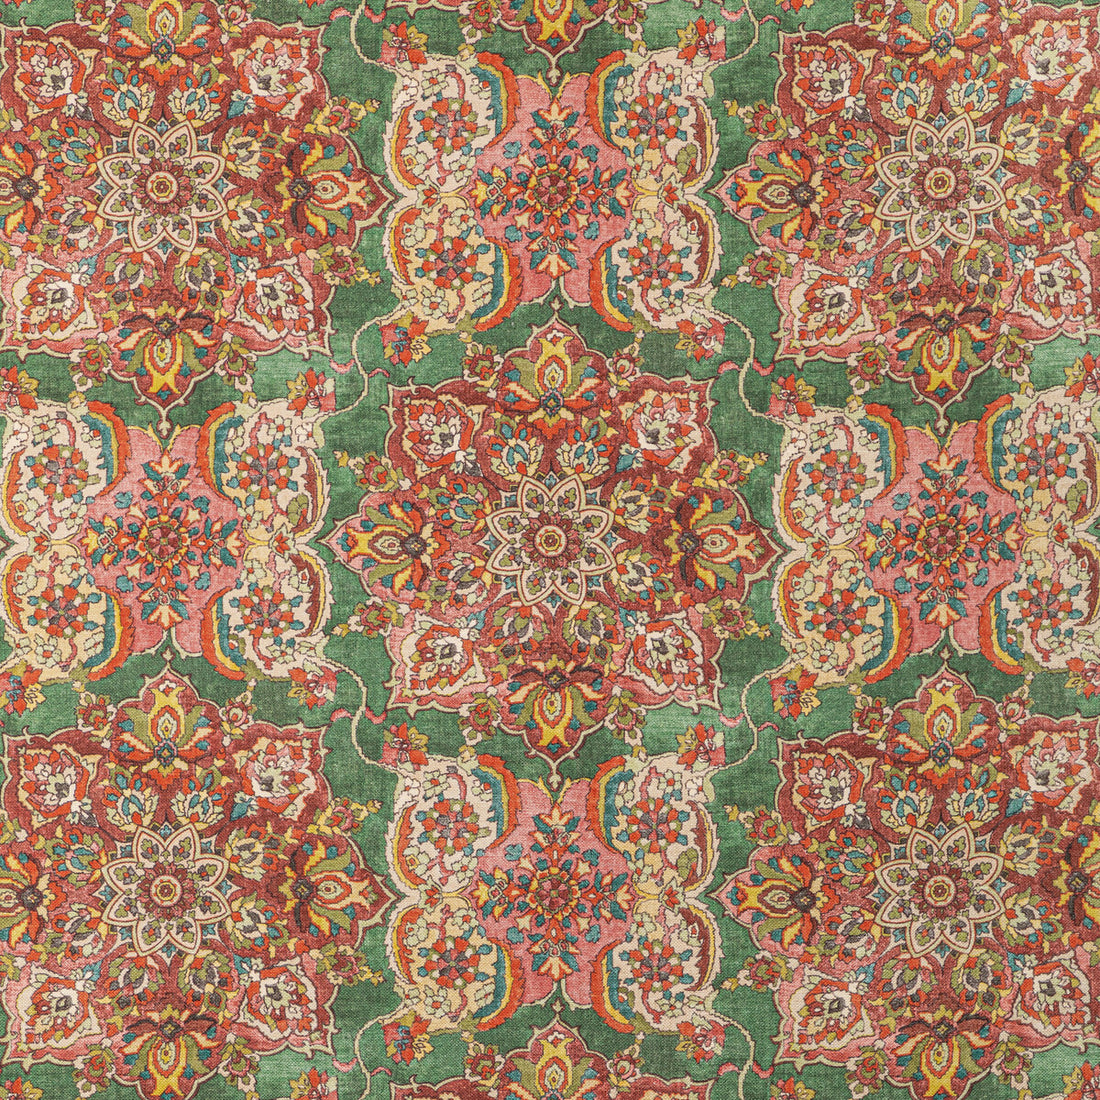 Granada Print fabric in jewel color - pattern 2020220.324.0 - by Lee Jofa in the Oscar De La Renta IV collection